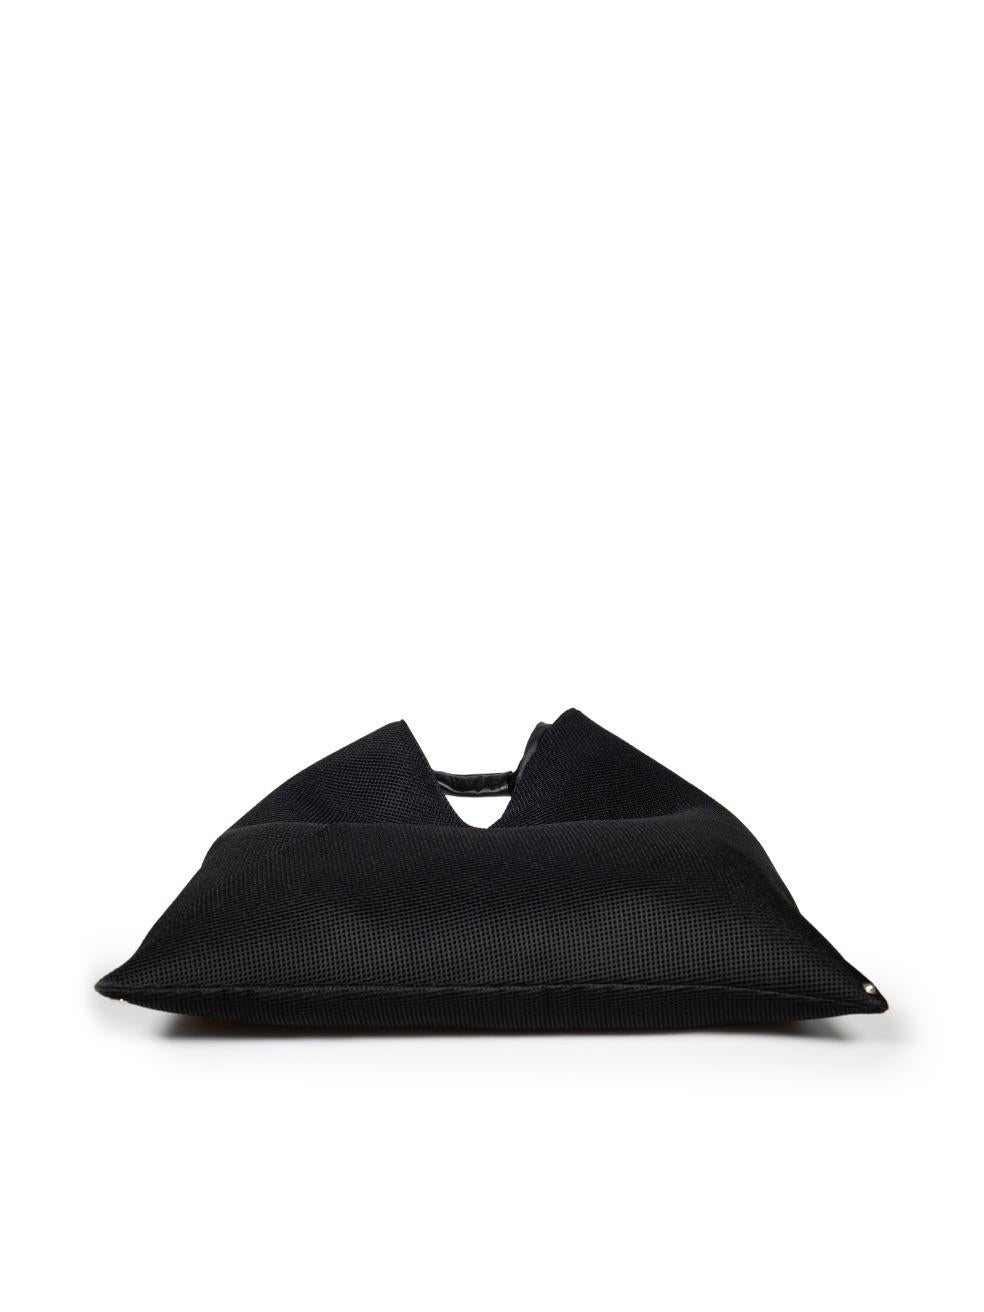 Women's Maison Margiela Black Tote Bag For Sale